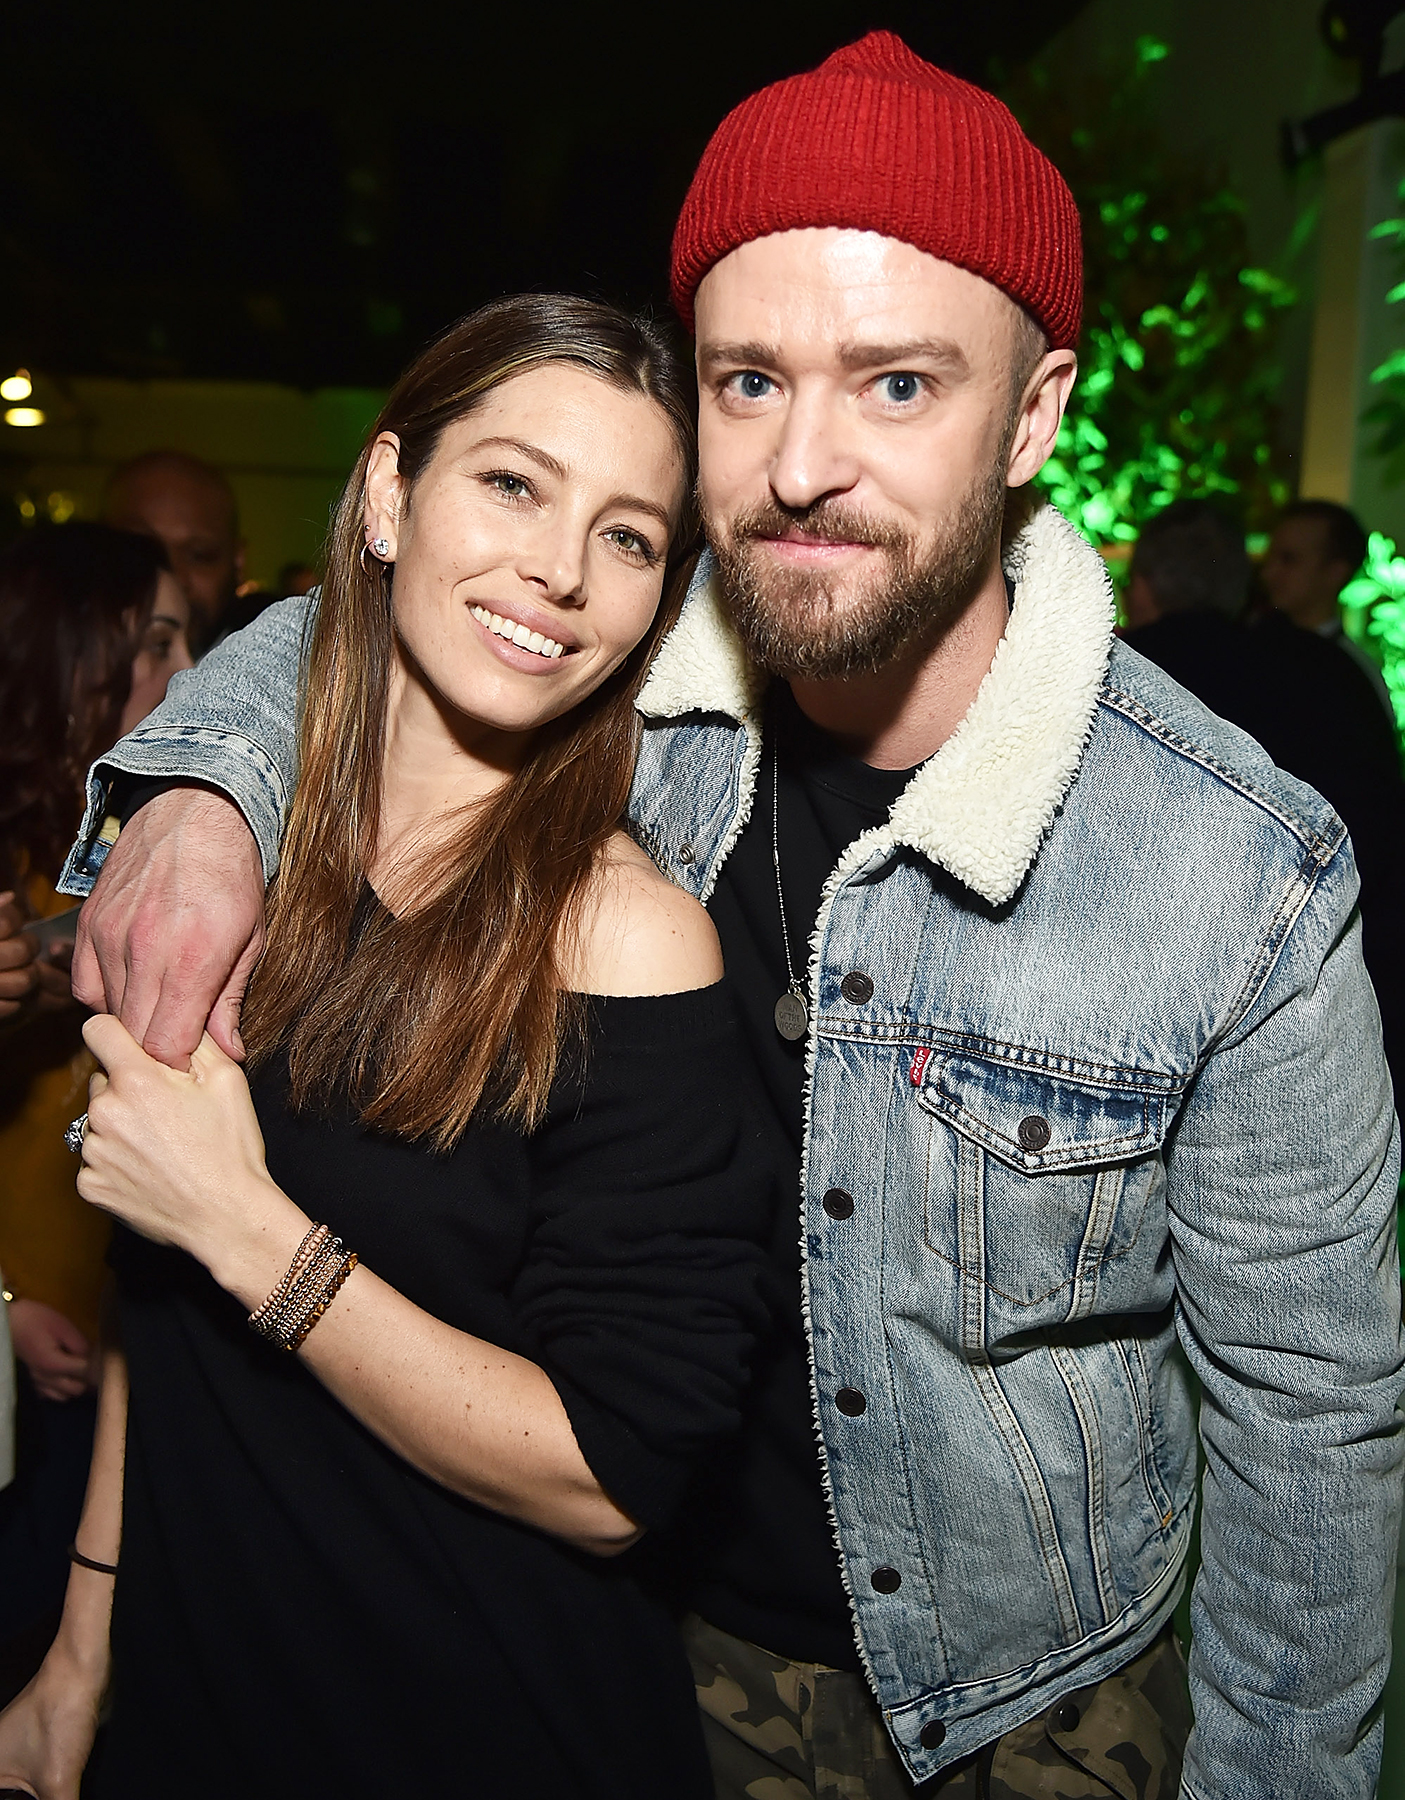 best post of JT on X: 📷 06/23 Justin Timberlake and Jessica Biel